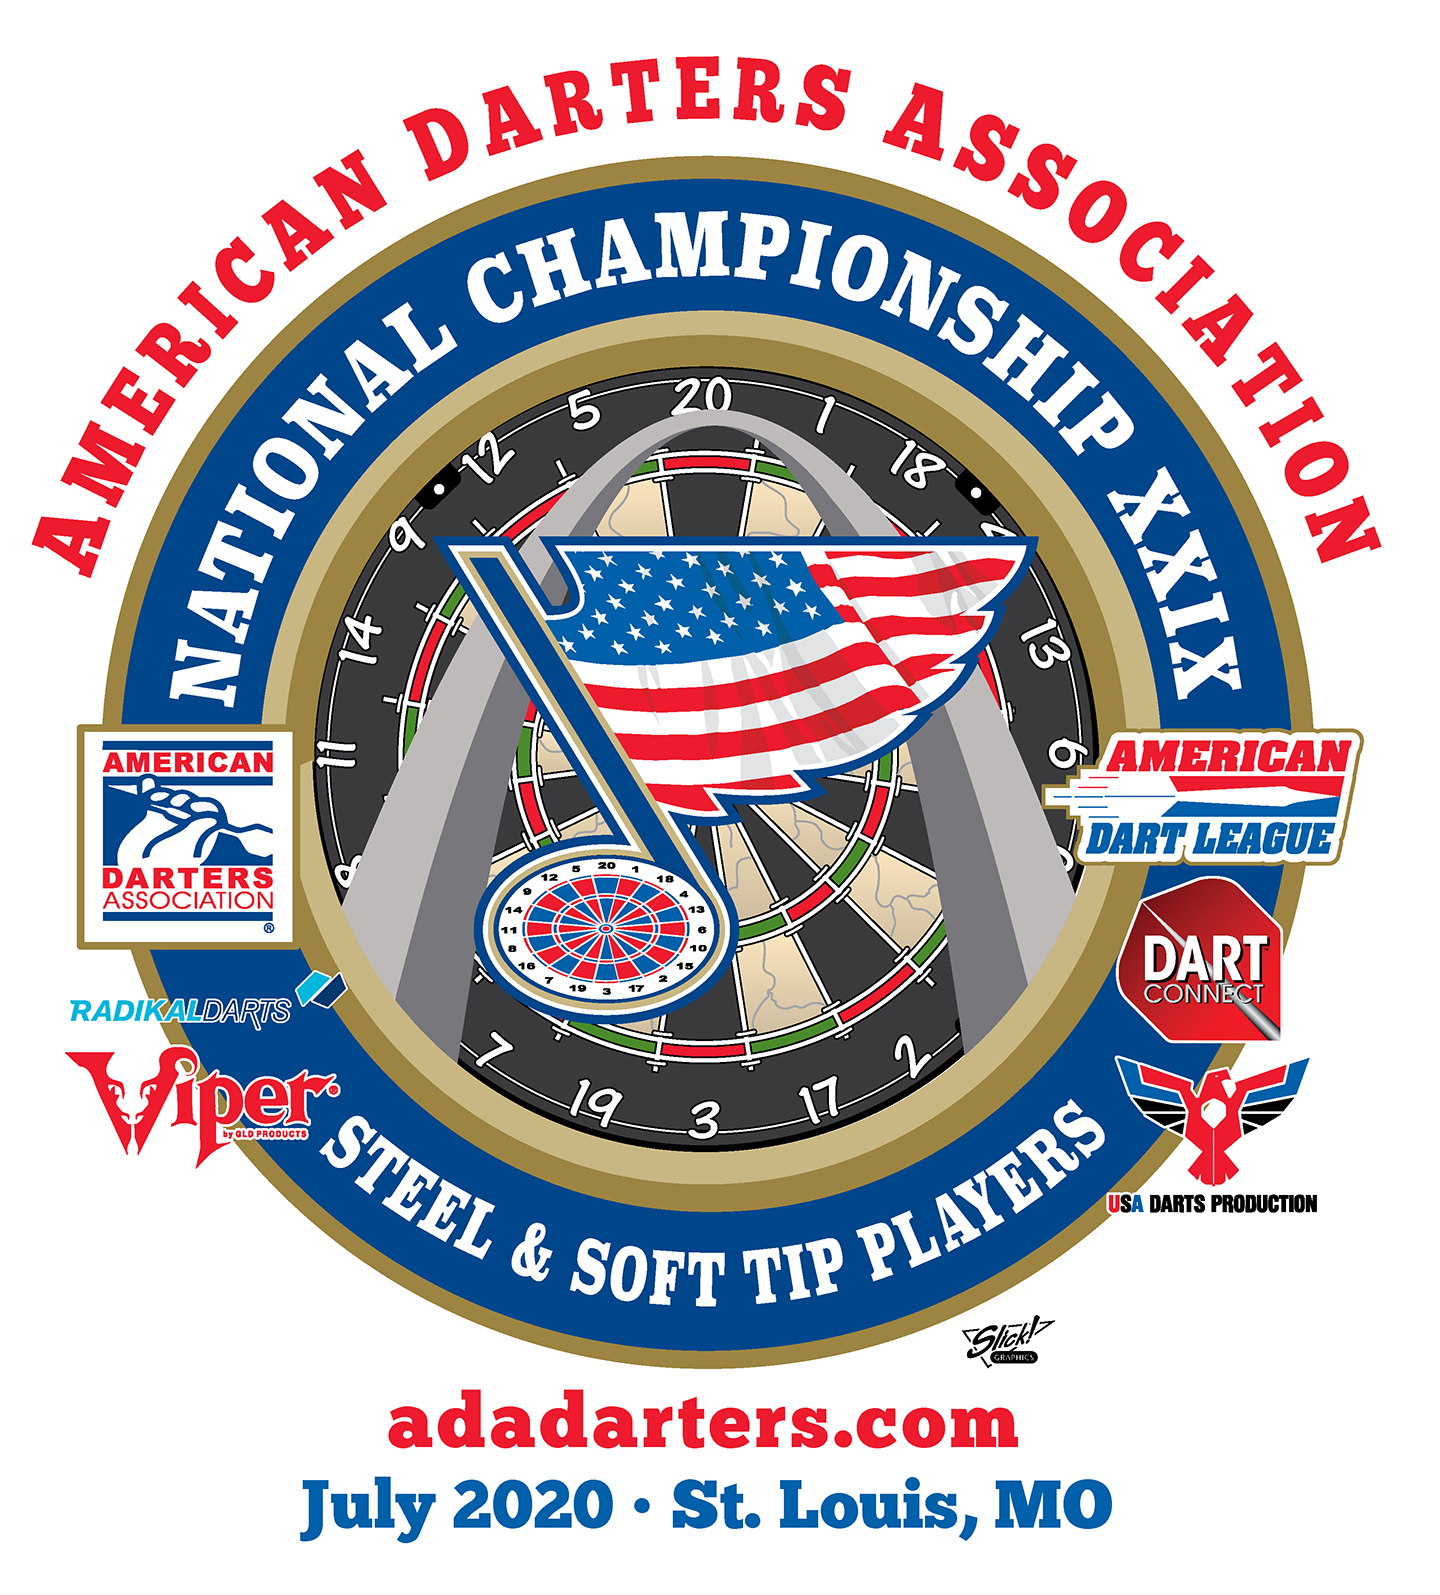 UPDATED ADA ST. LOUIS NATIONALS 2020 - ADA - The American Darters Association